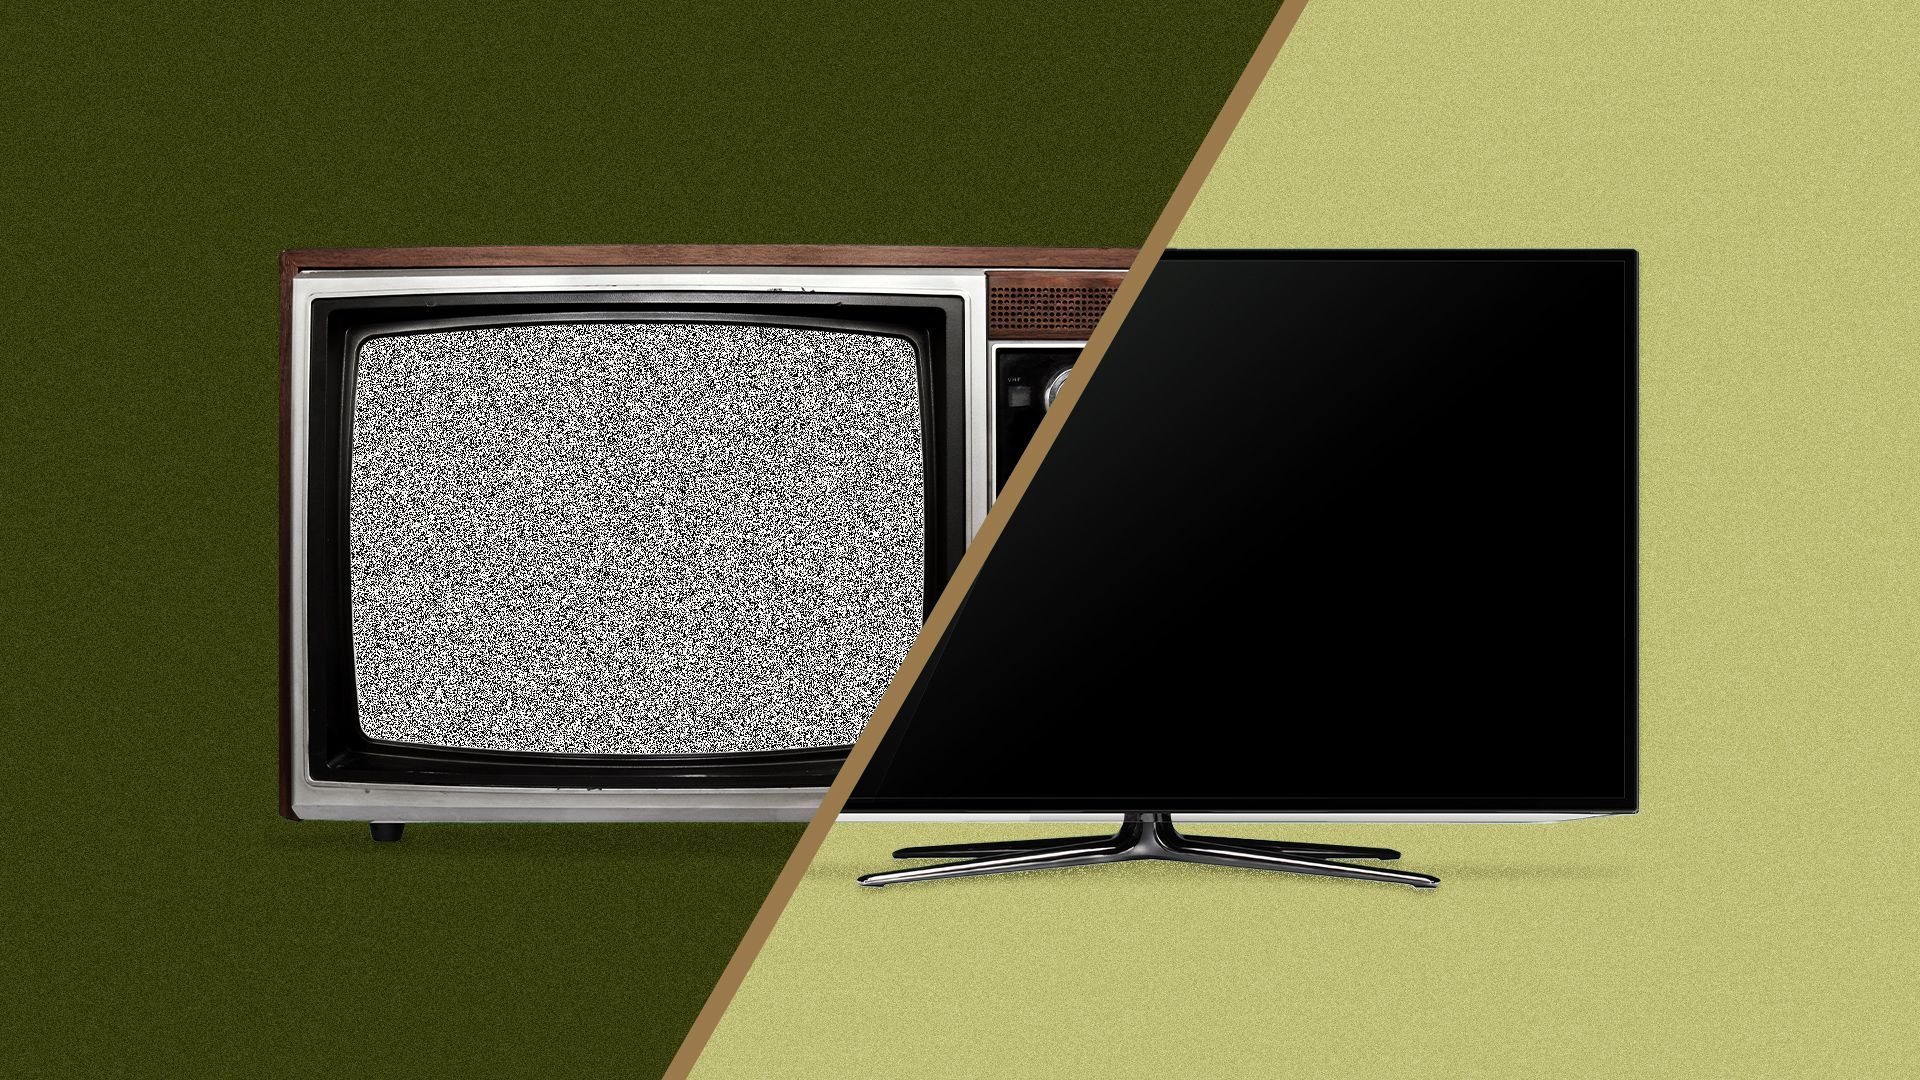 Illustration of a vintage television split with a modern smart television.